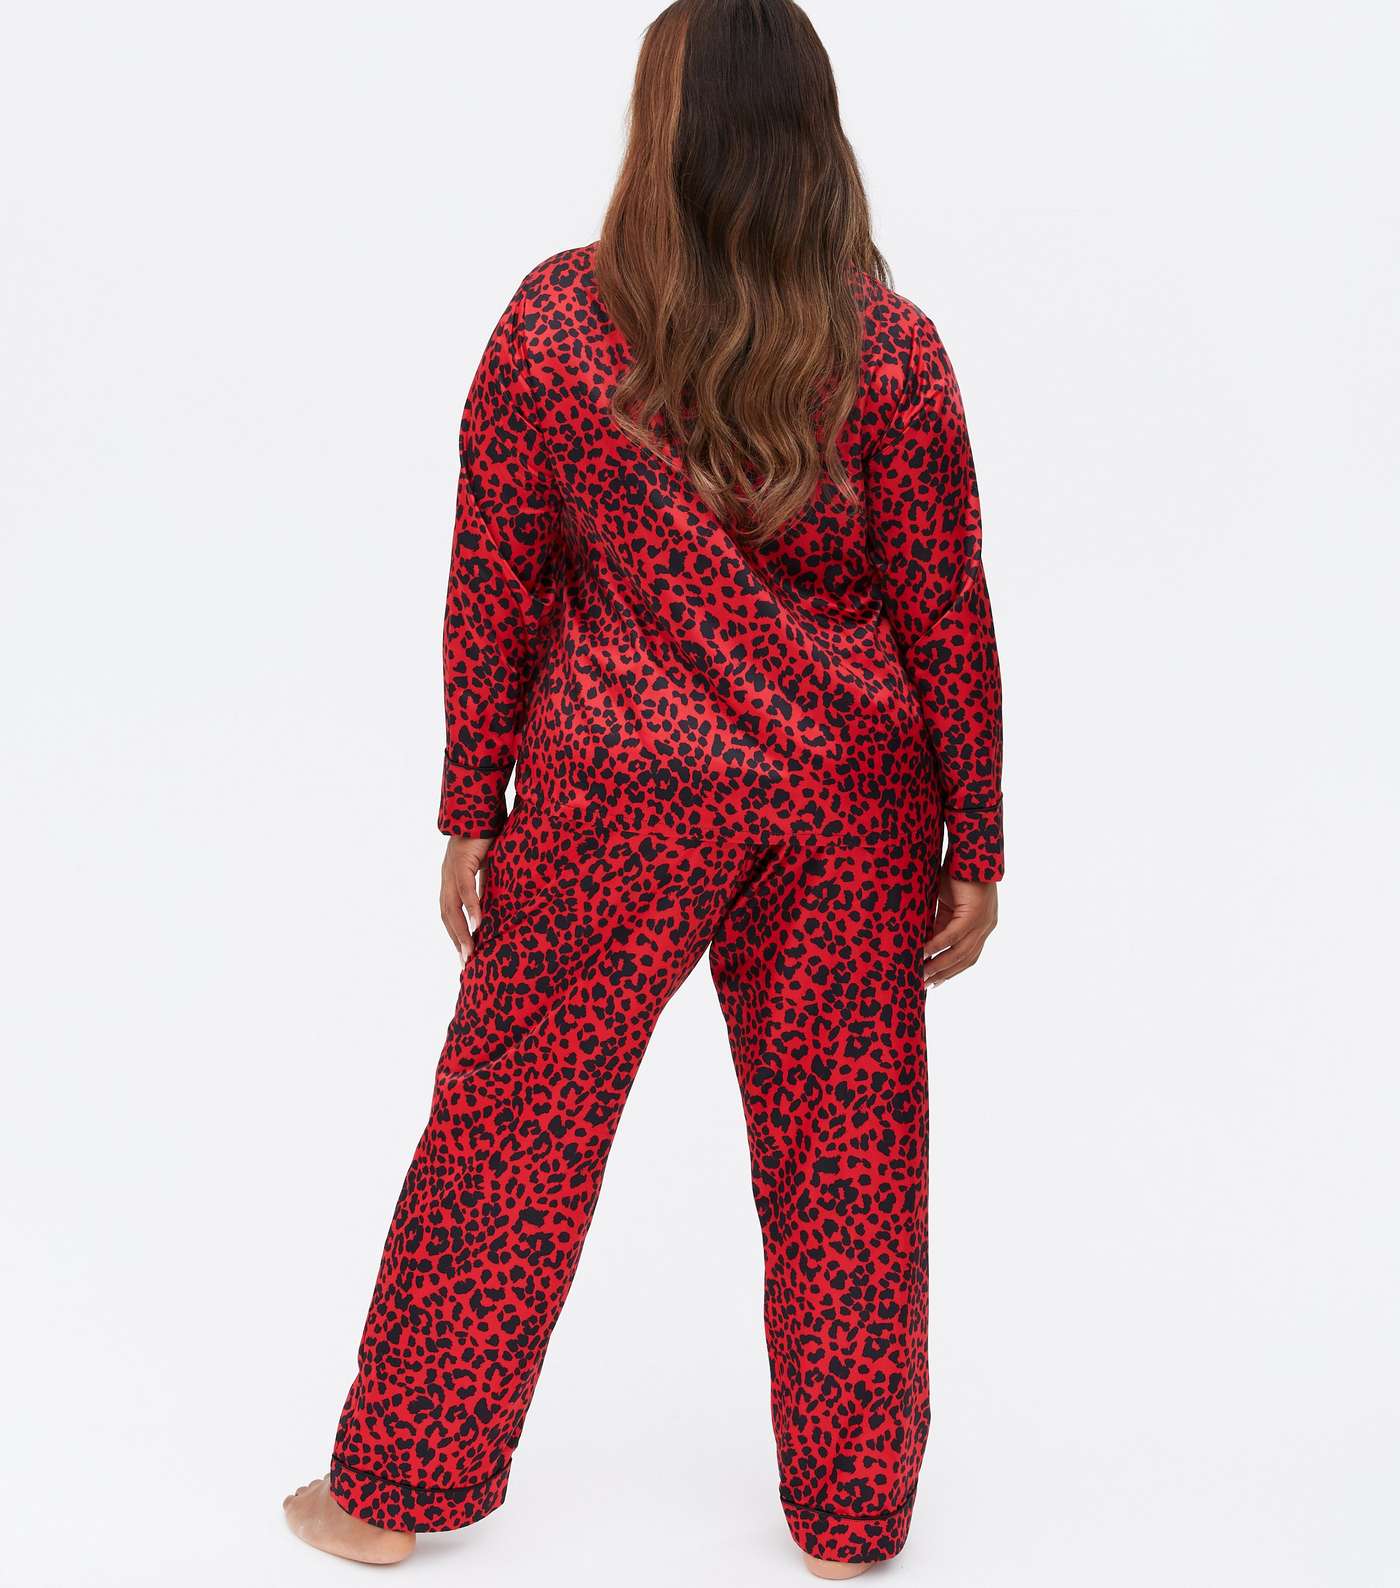 Curves Red Satin Trouser Pyjama Set with Leopard Print Image 4